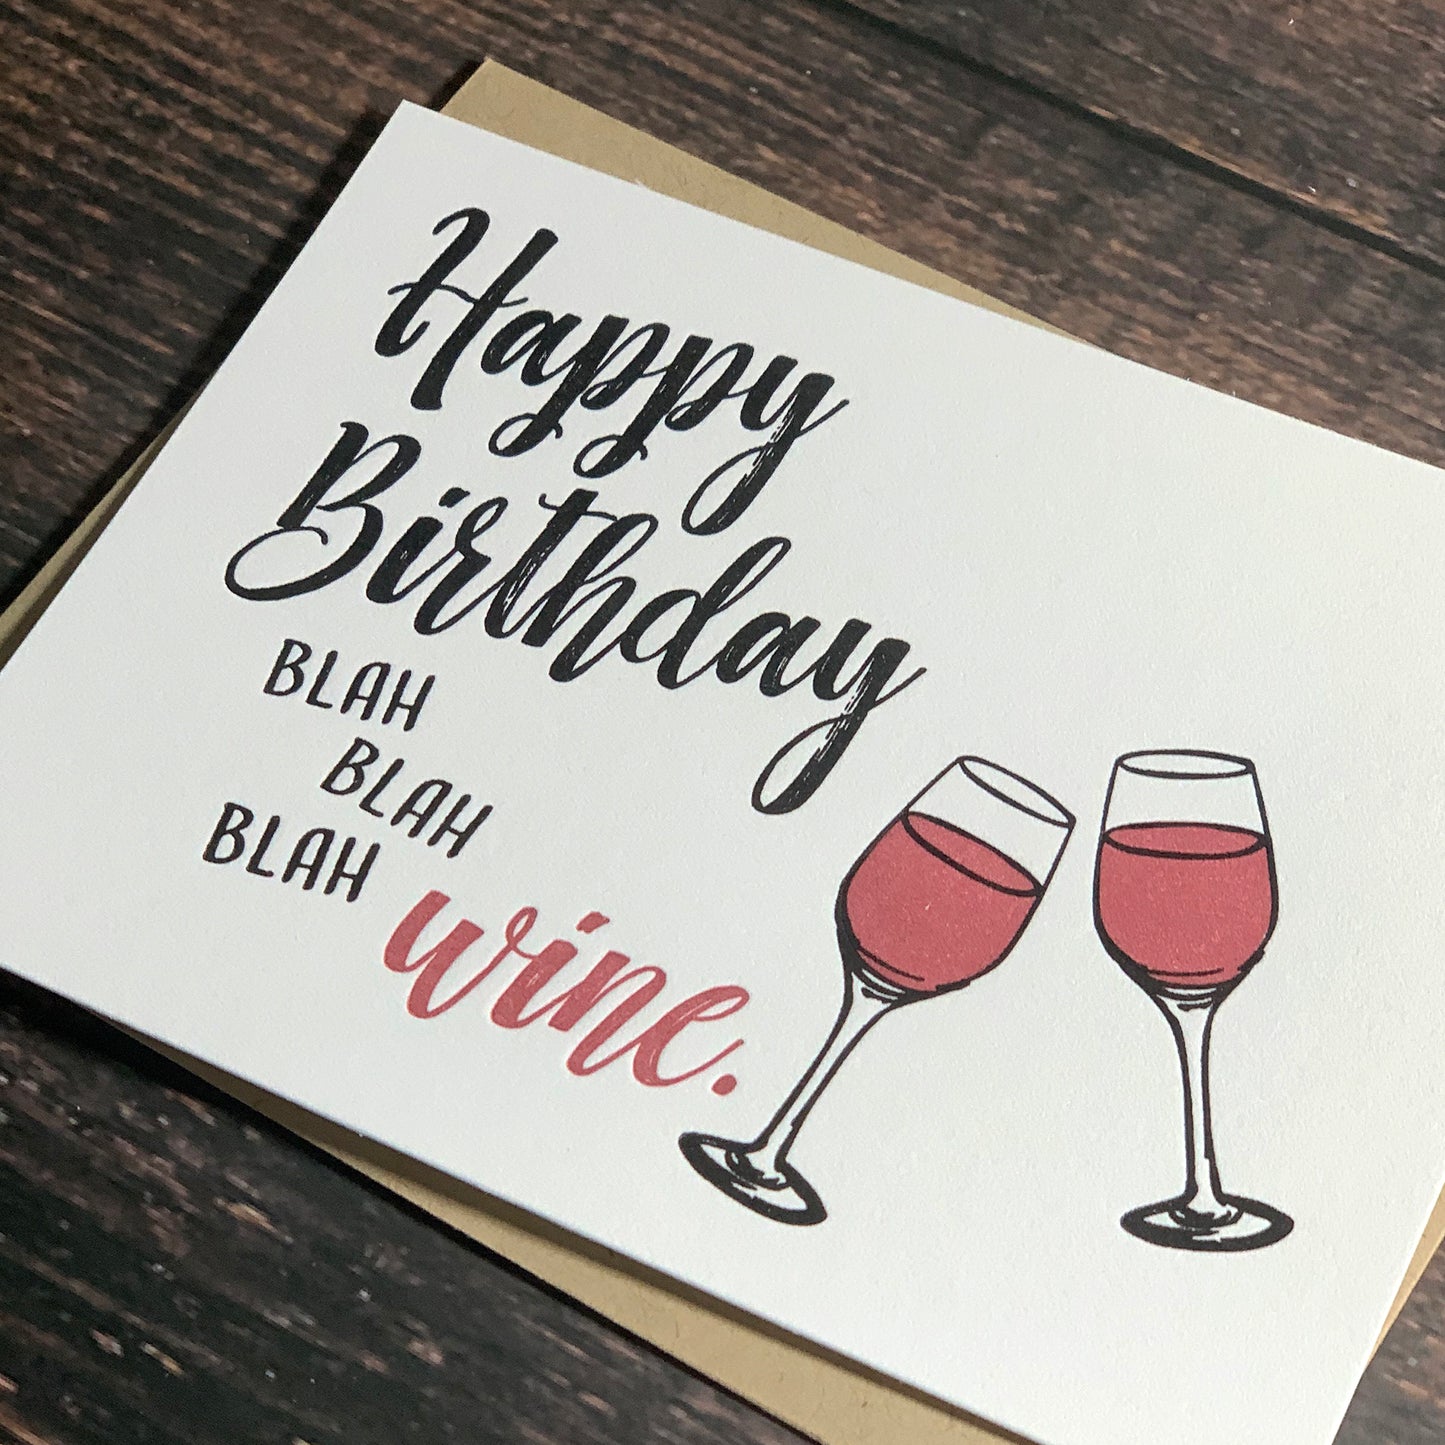 Happy Birthday, Blah, Blah, Blah, Wine. Birthday Card, Letterpress printed, view shows letterpress impression, includes envelope